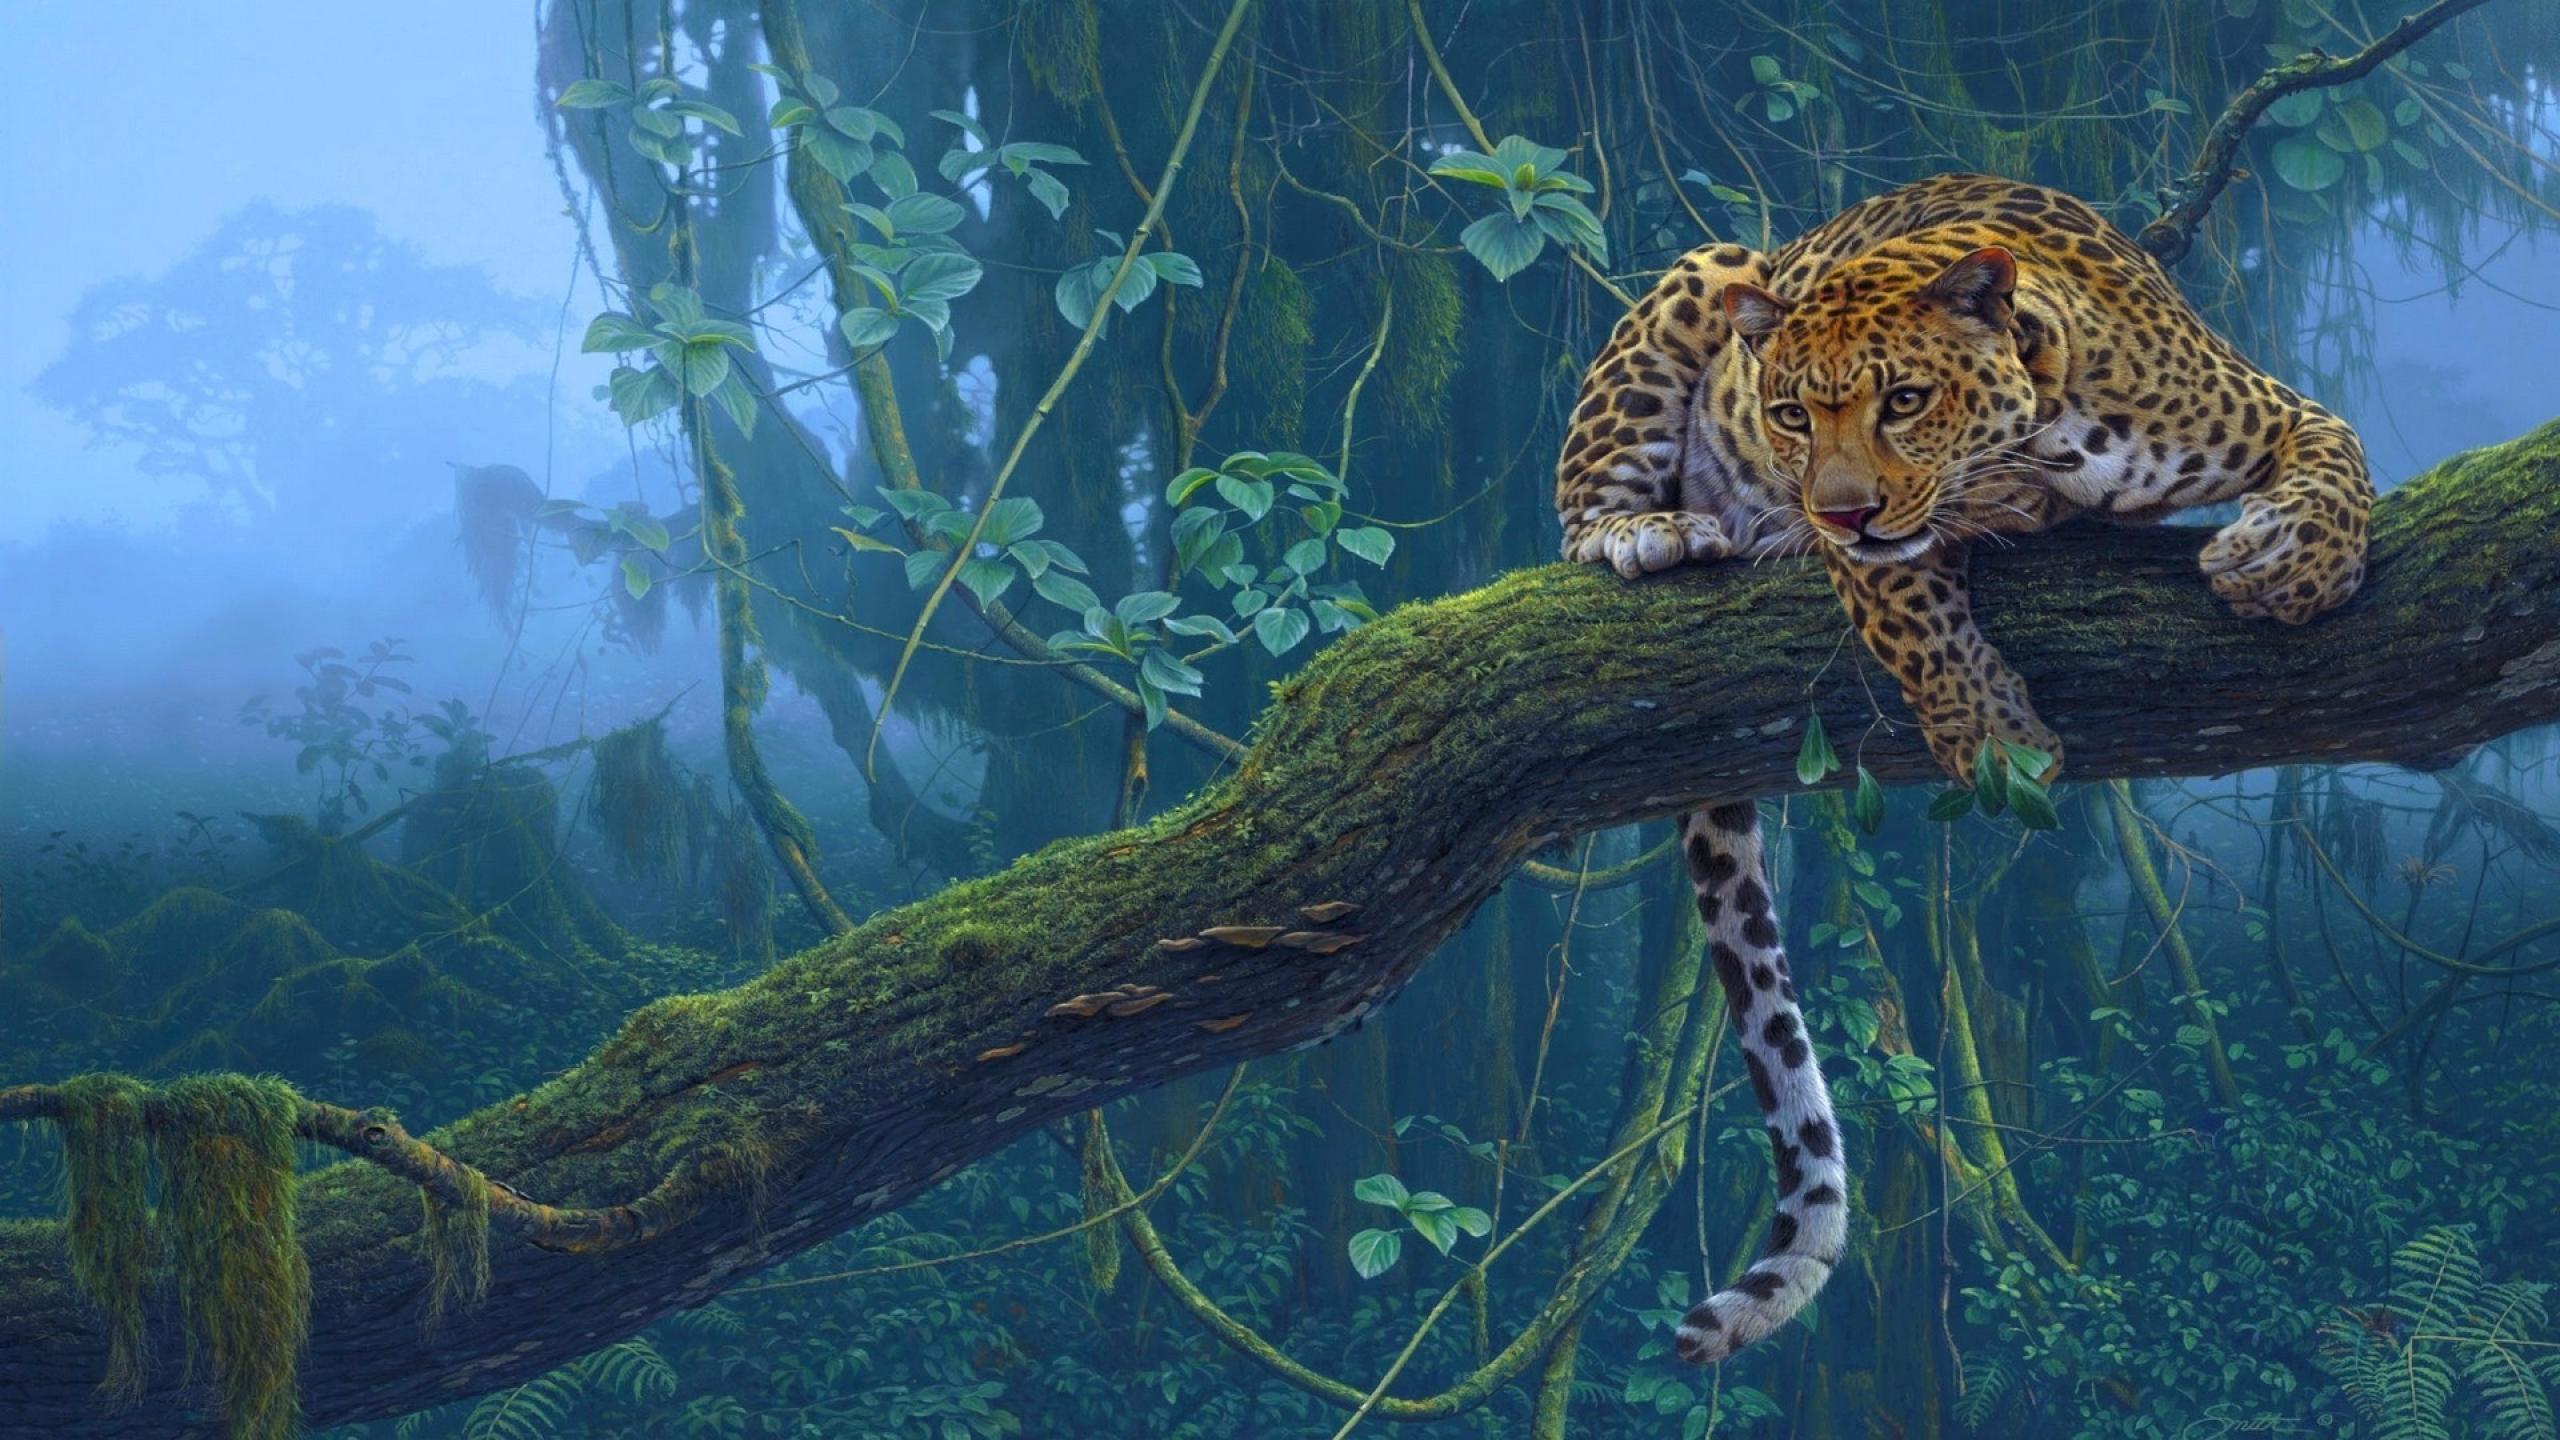 jungle, rainforest, fog, branch, cats, leopard, animal